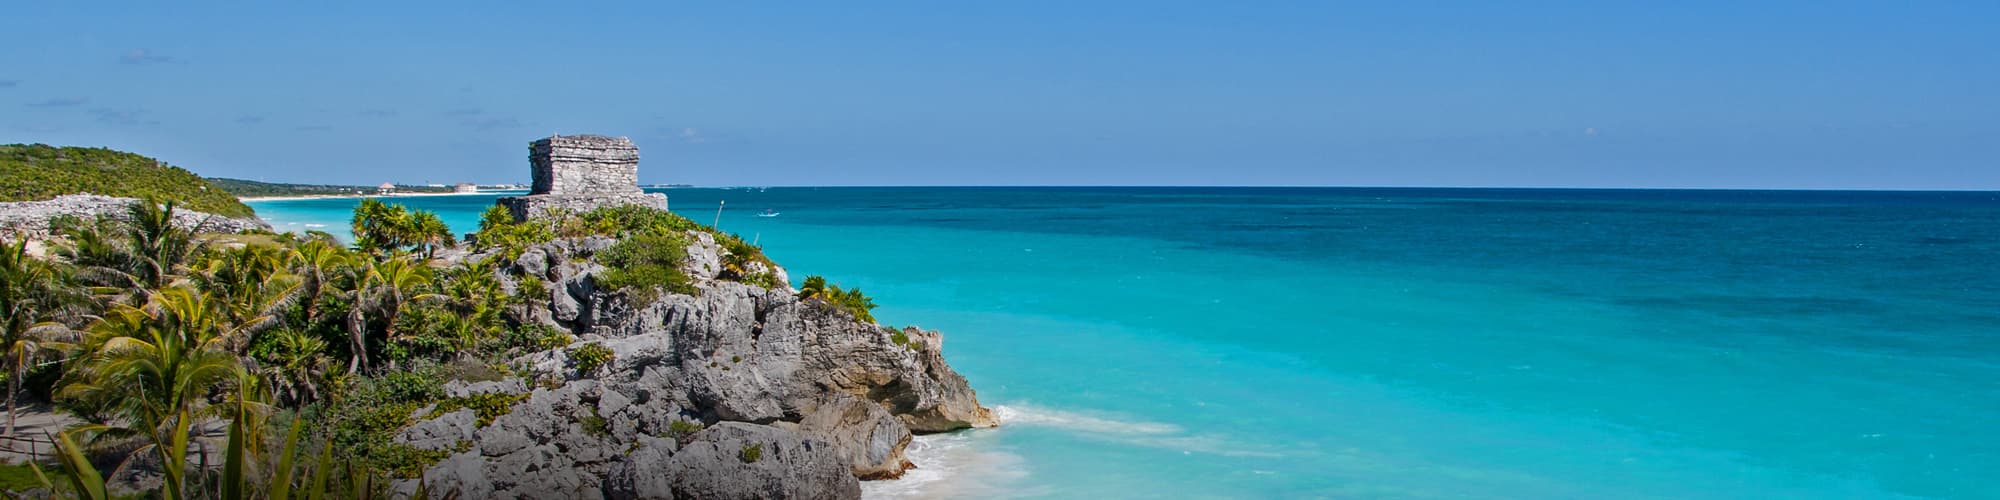 Découverte Yucatan et Caraïbes © markross / Istock